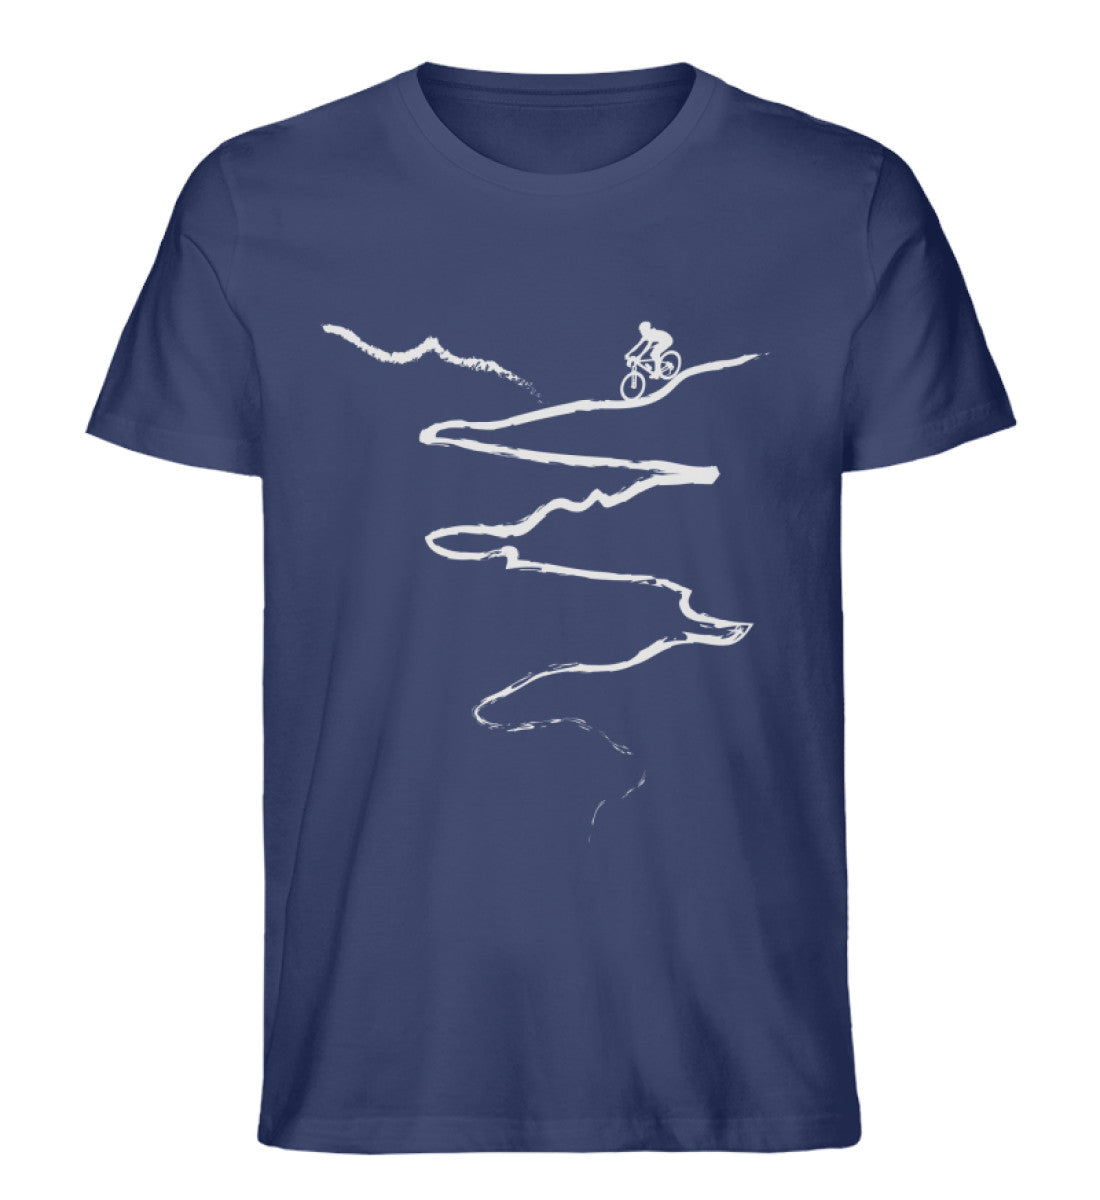 Downhill Mountainbiken - Herren Organic T-Shirt mountainbike Navyblau